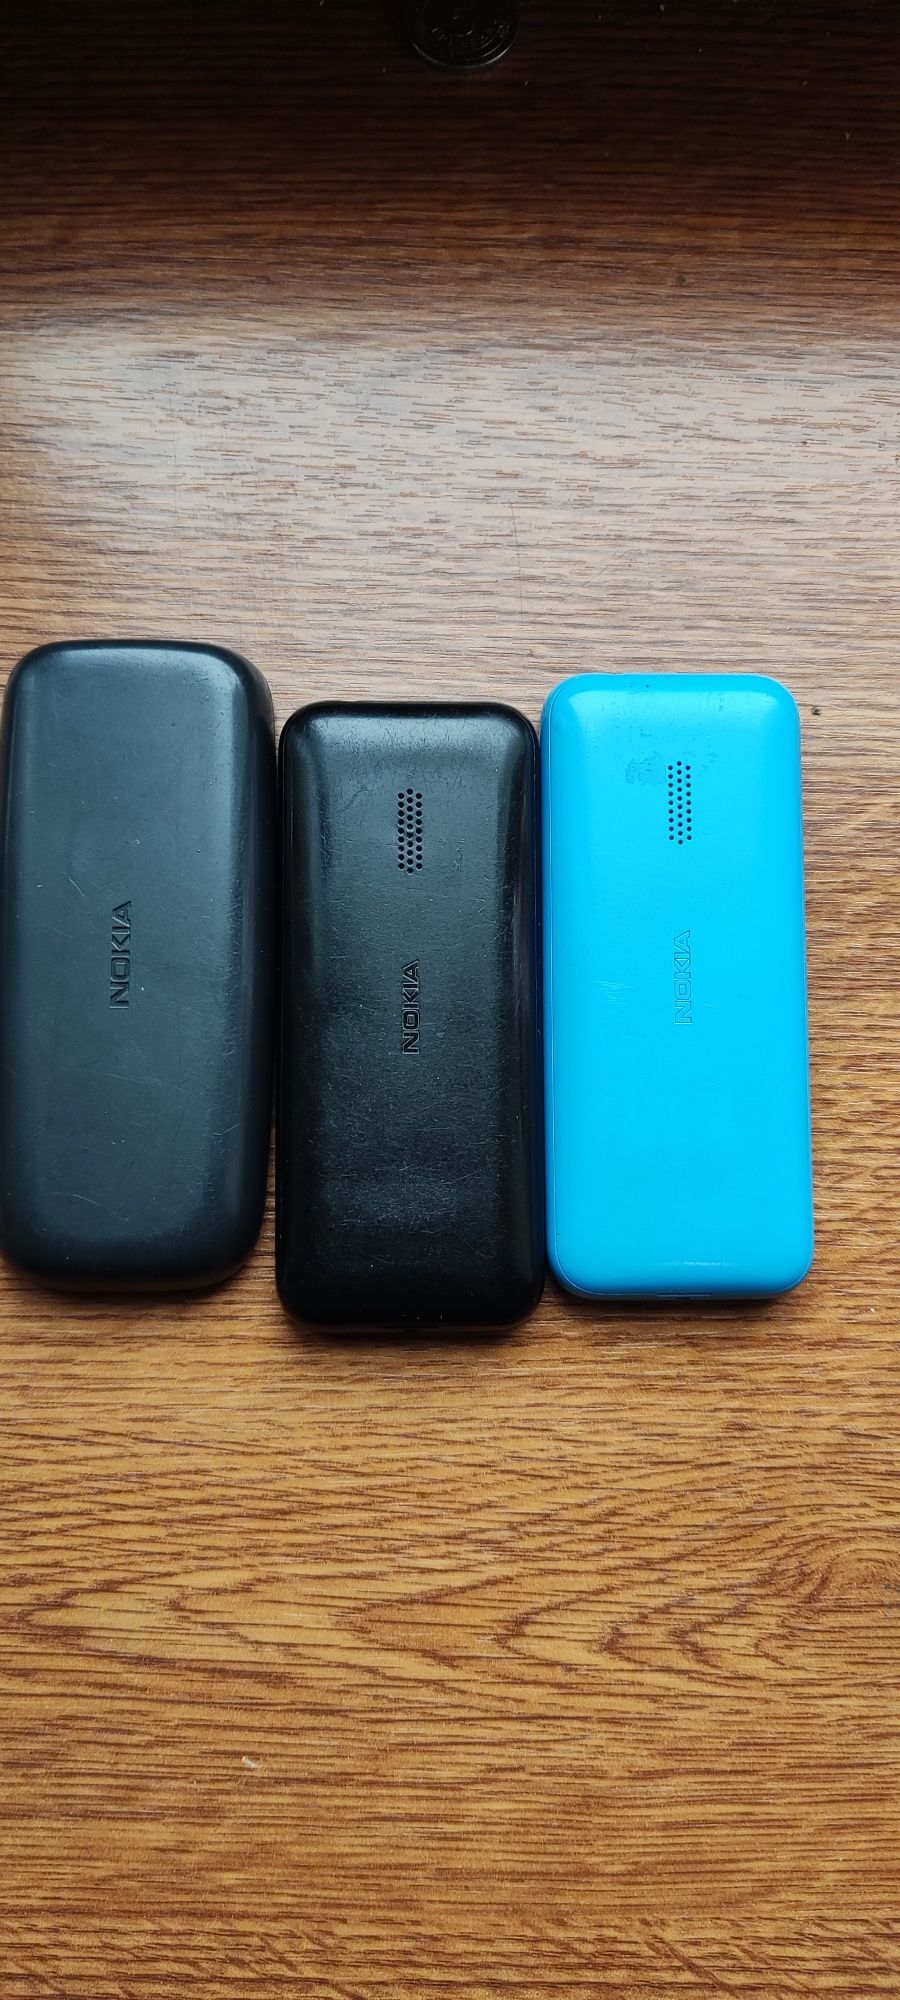 Кнопочний телефен Nokia 105 звонилка